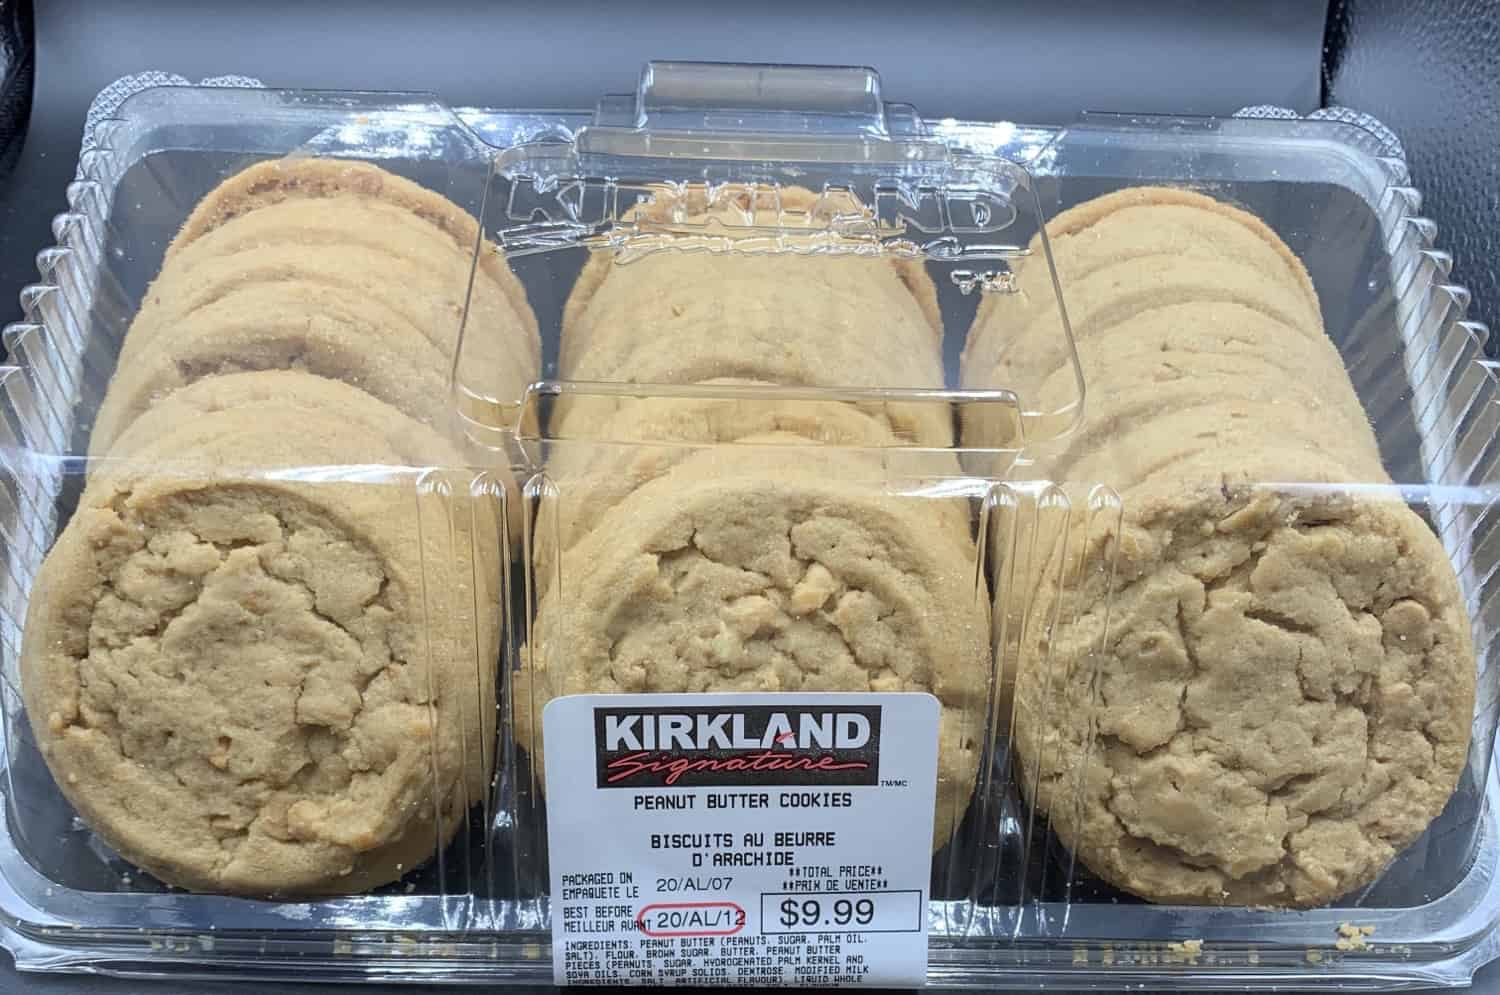 Costco Kirkland Signature Peanut Butter Cookies Review Costcuisine